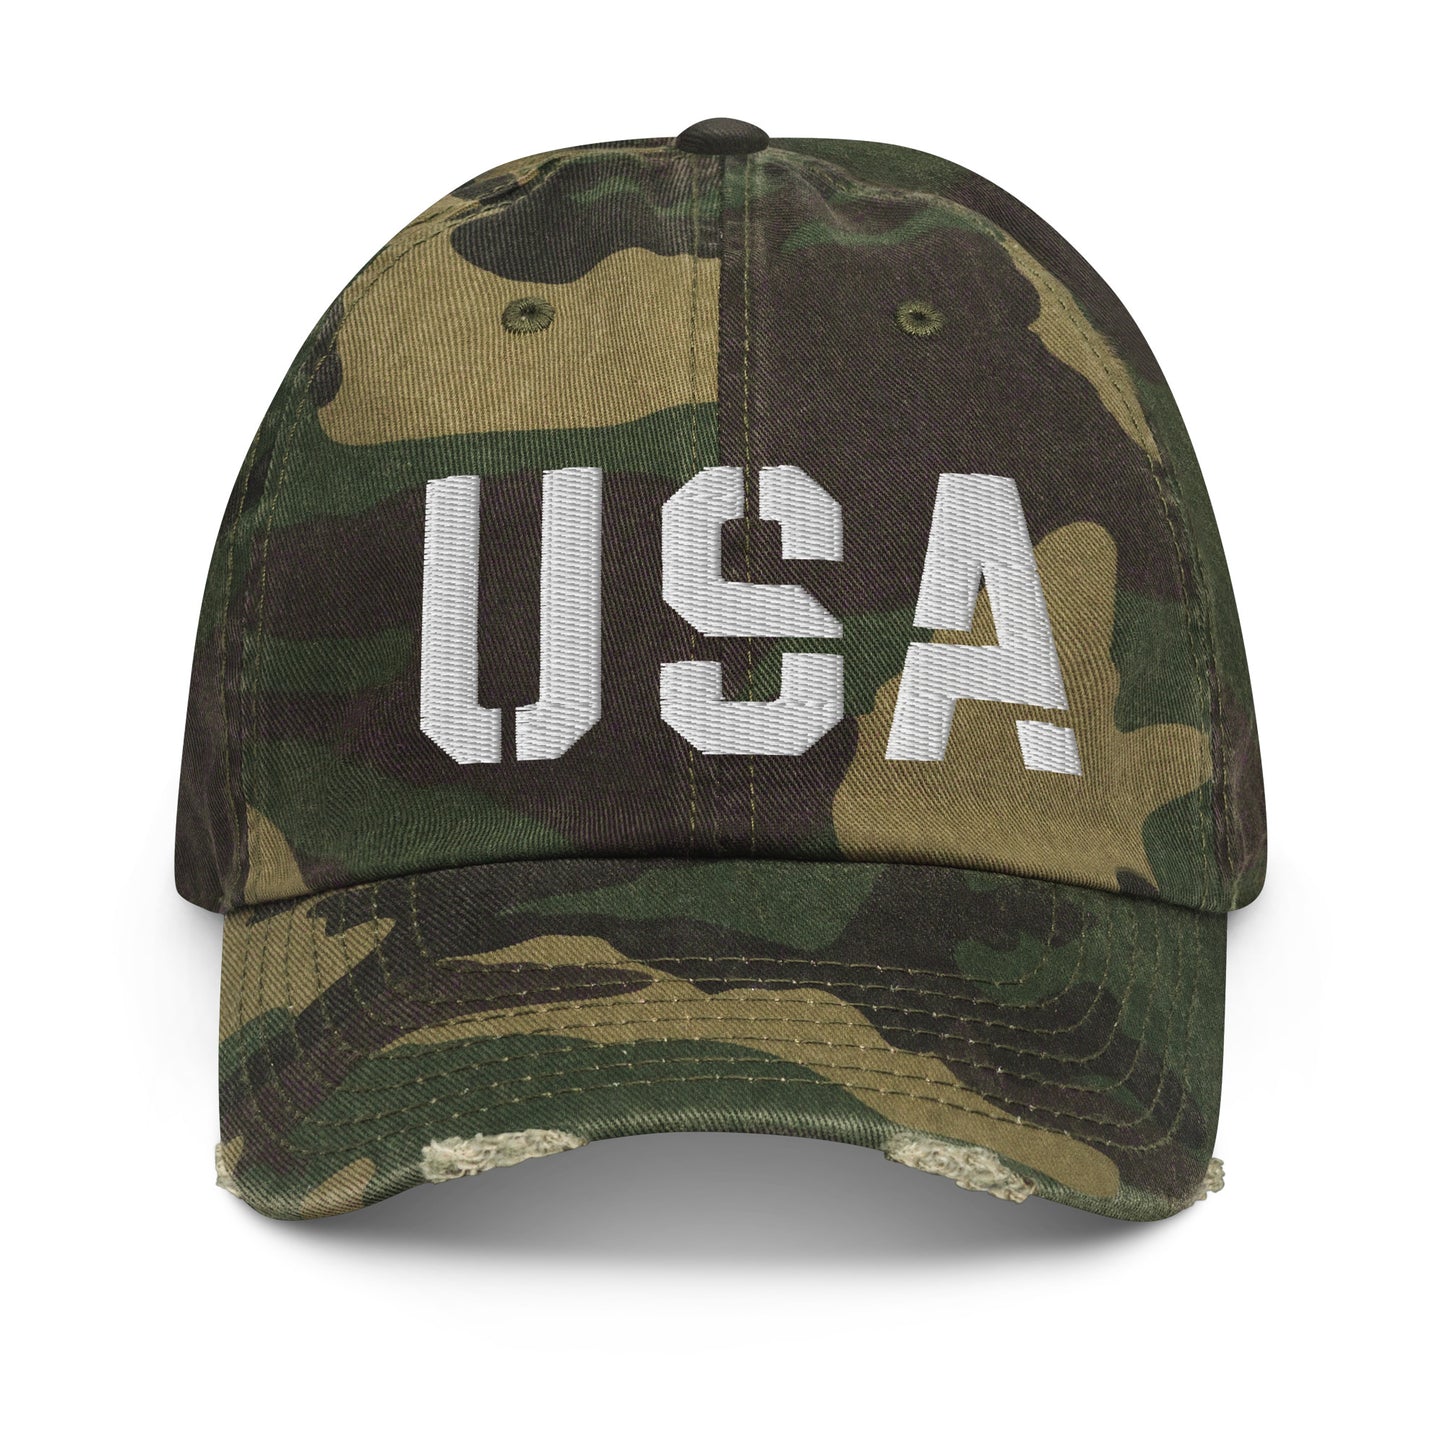 USA-Distressed ball cap